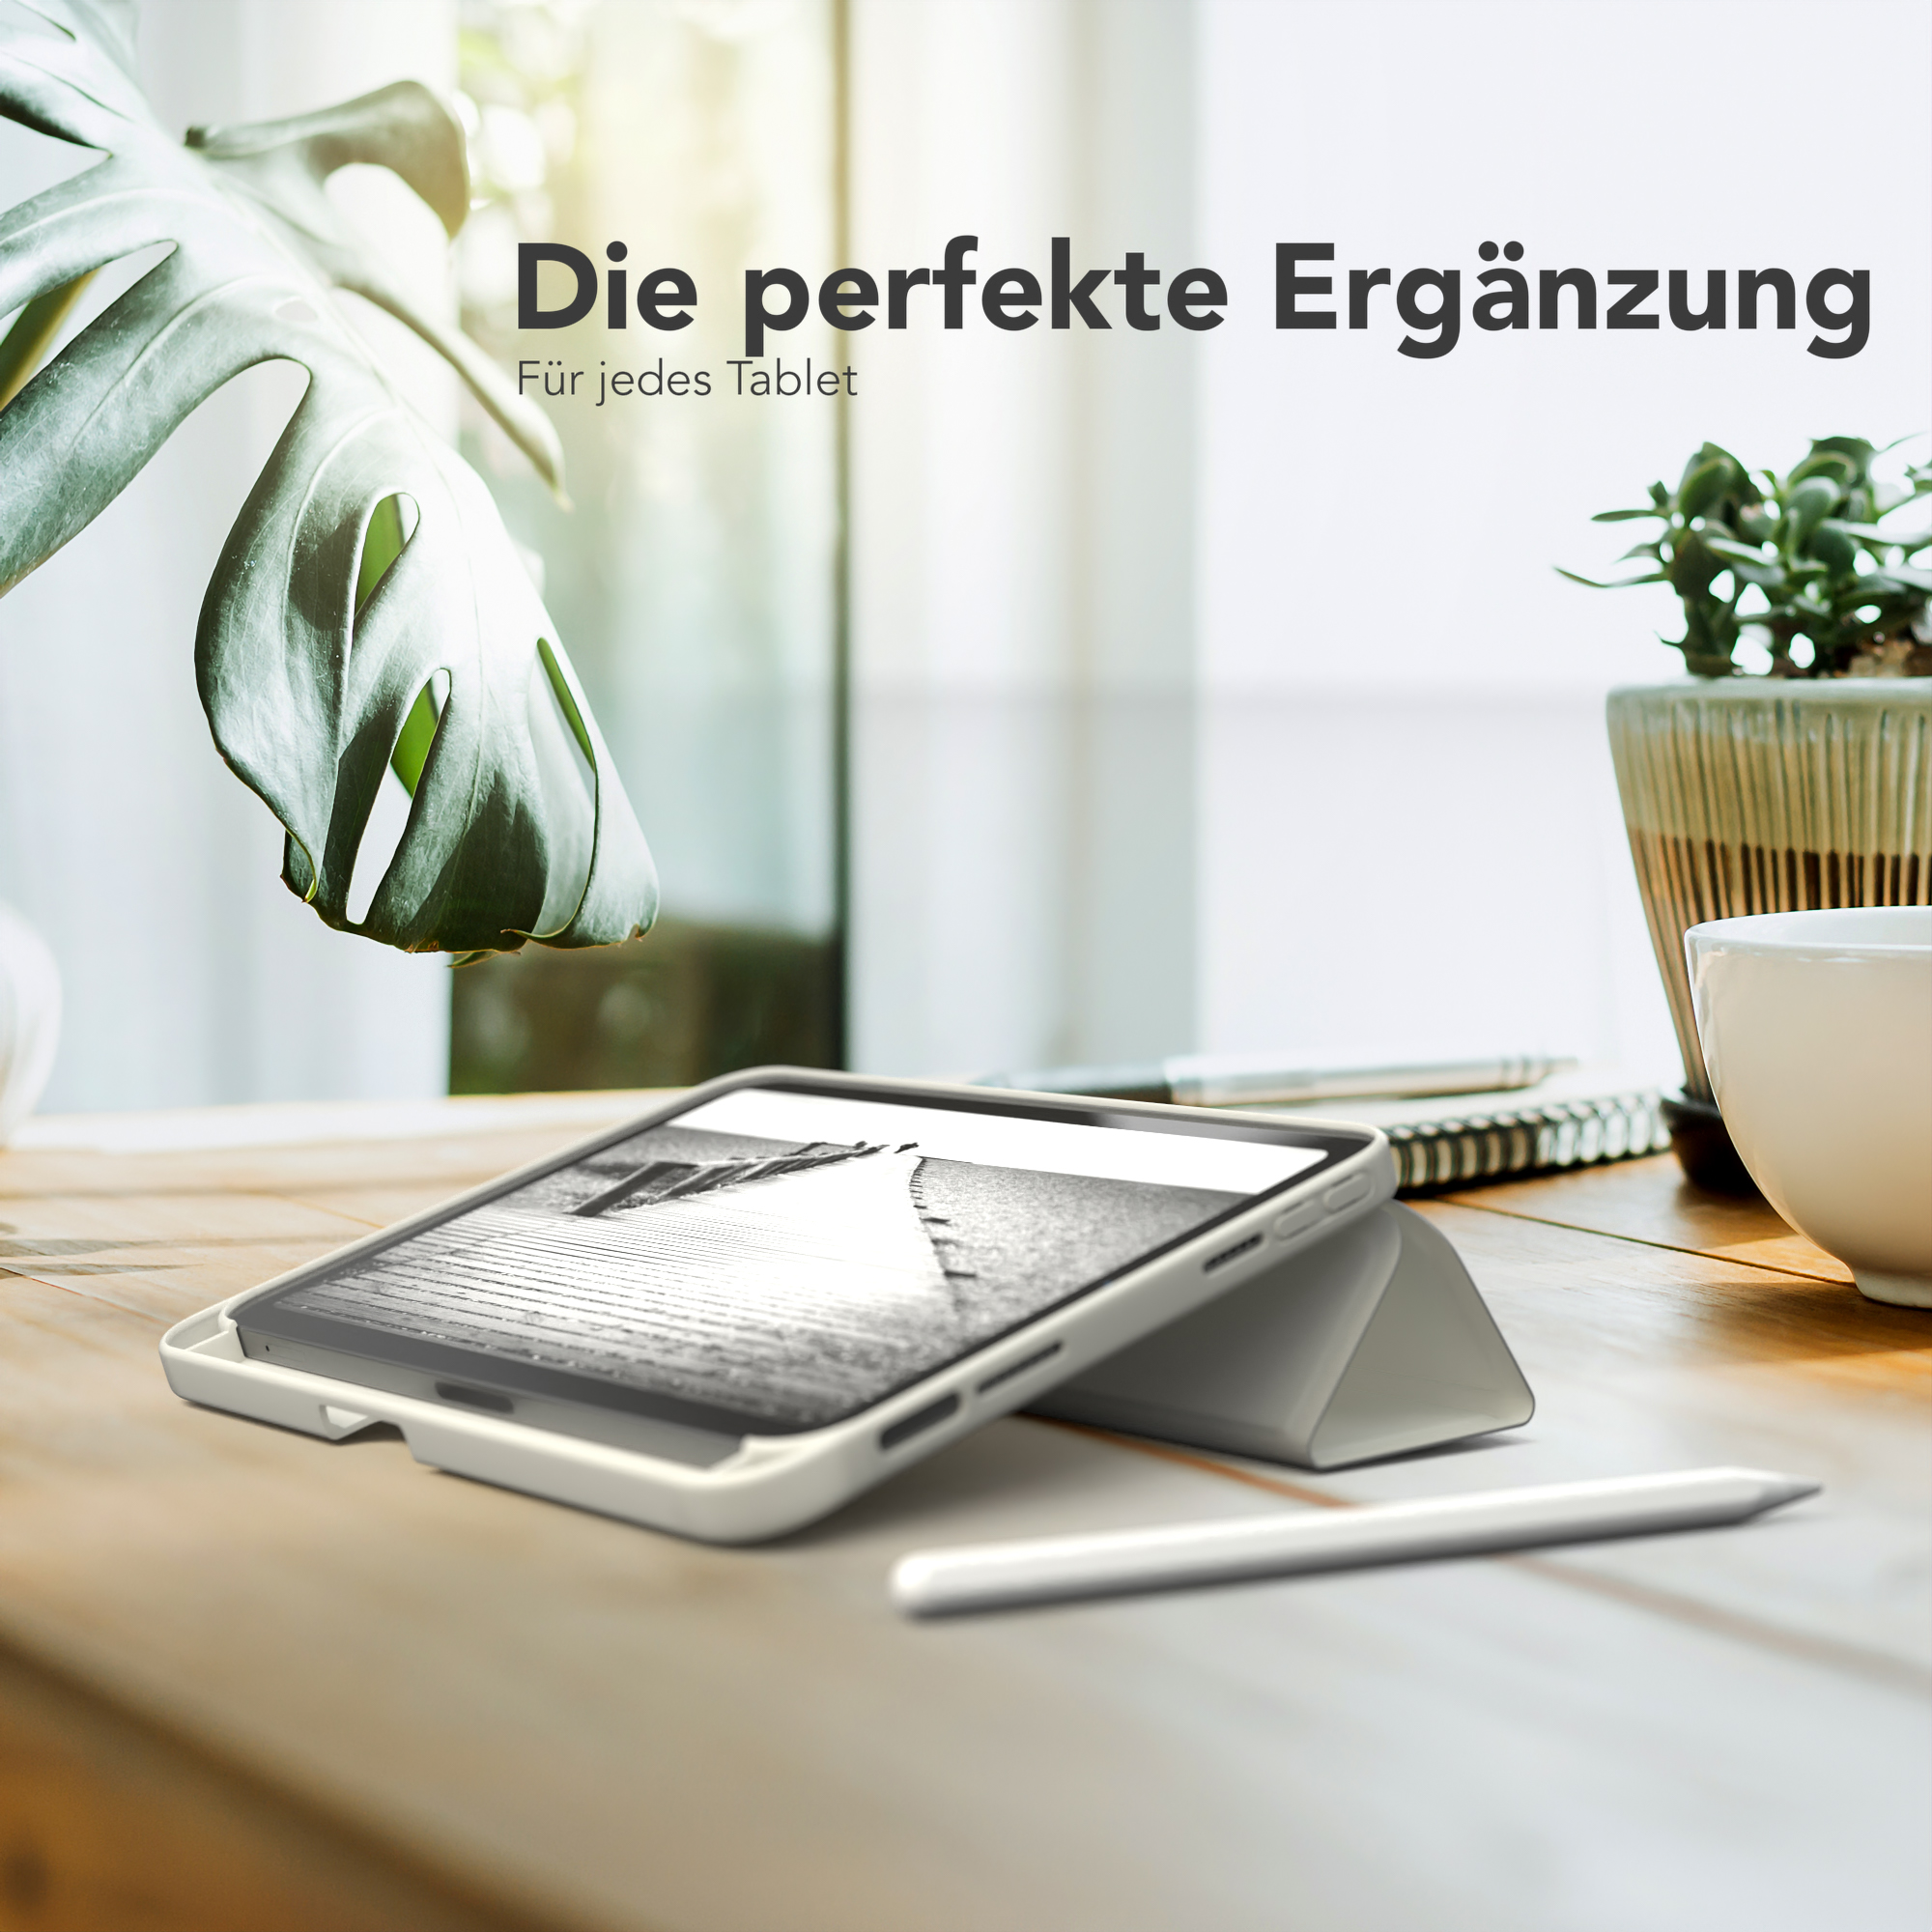 EAZY CASE Smartcase mit Stifthalter für / iPad Bookcover 2021 Kunstleder, Mini Grau Hellgrau Tablethülle Apple 6